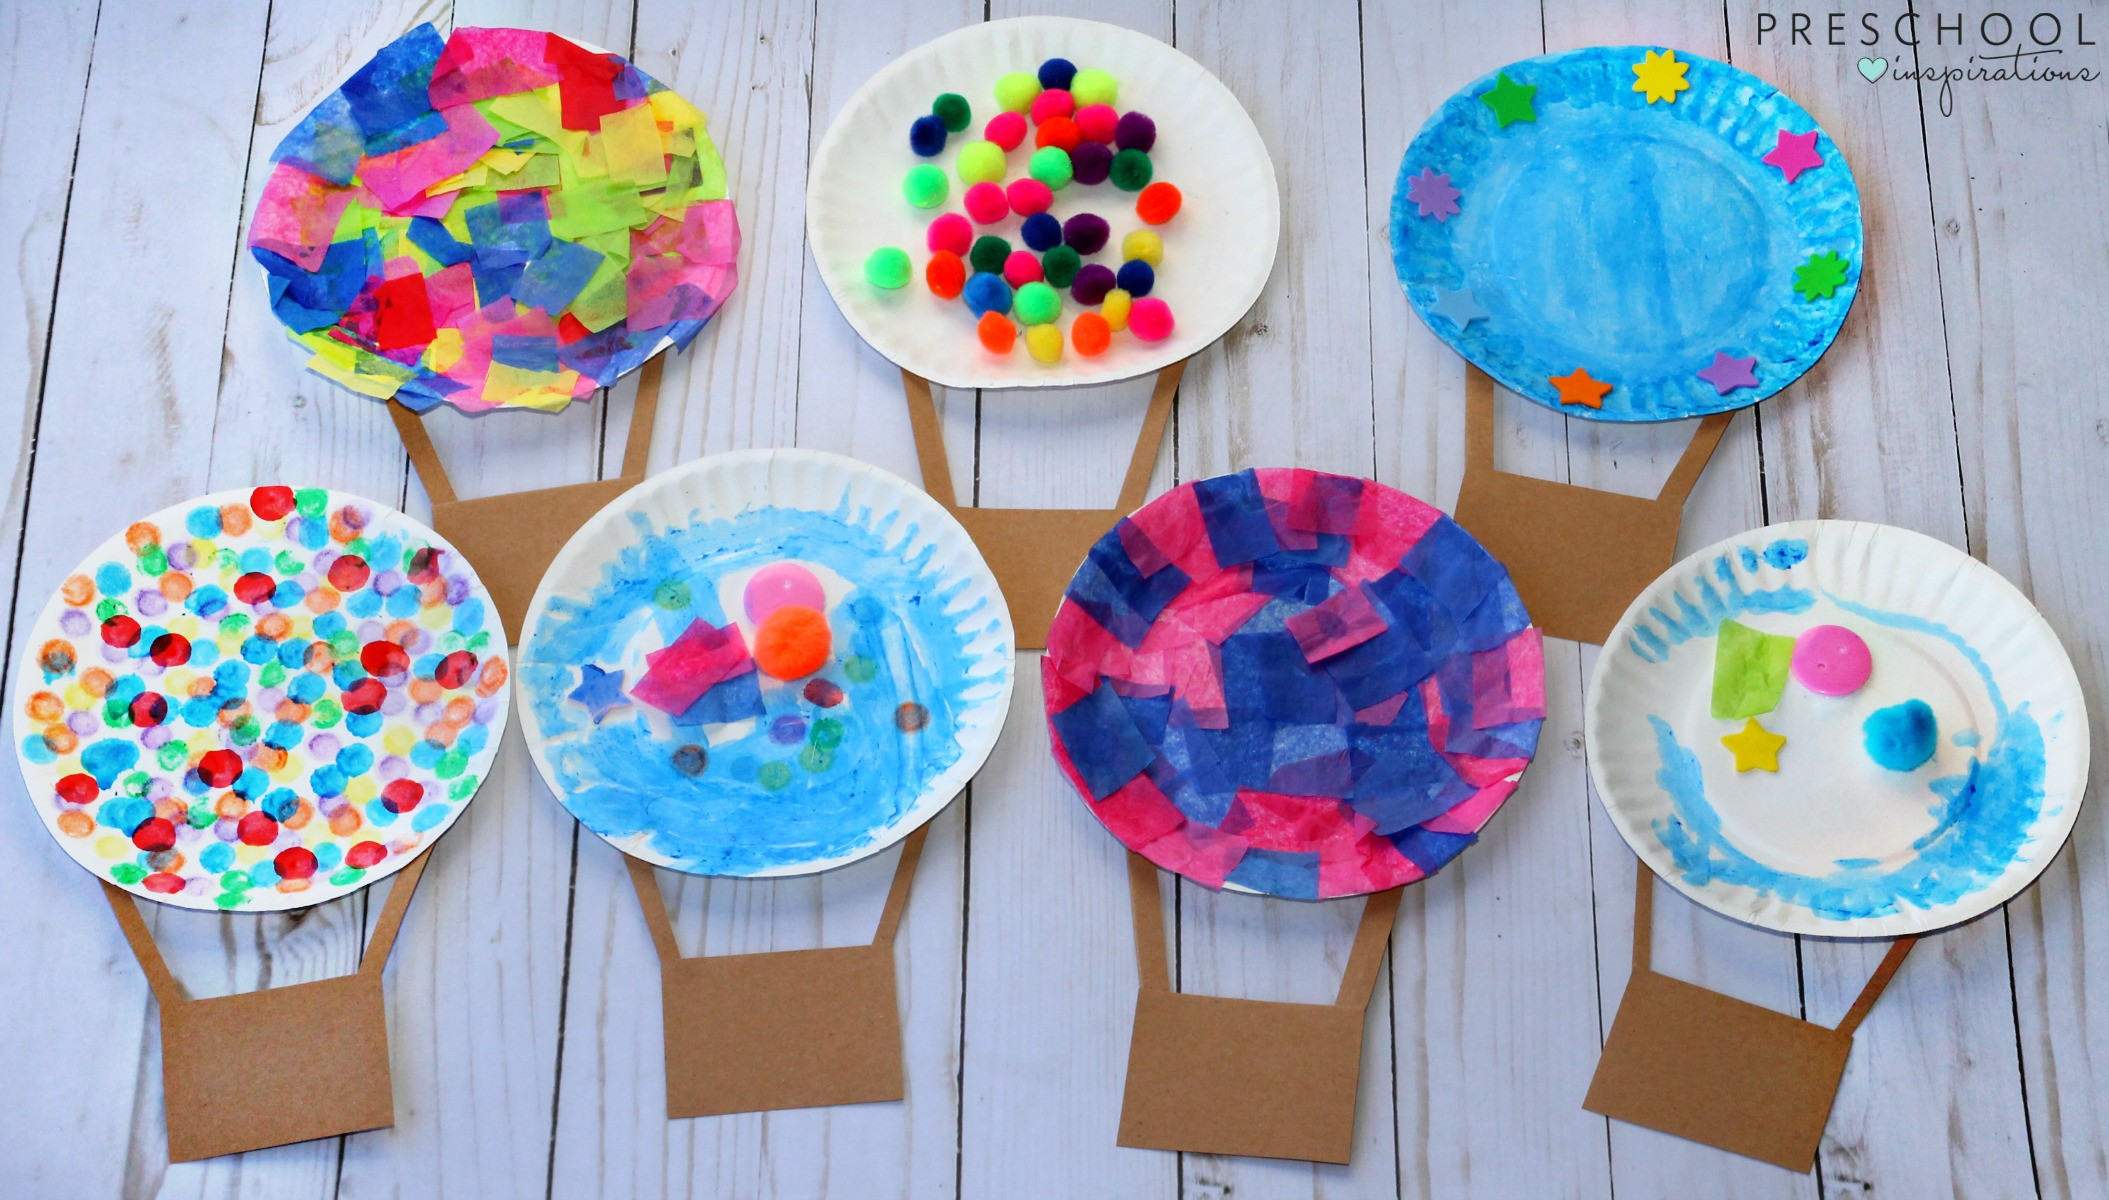 Best ideas about Art And Craft Activities
. Save or Pin Hot Air Balloon Process Art Activity Preschool Inspirations Now.